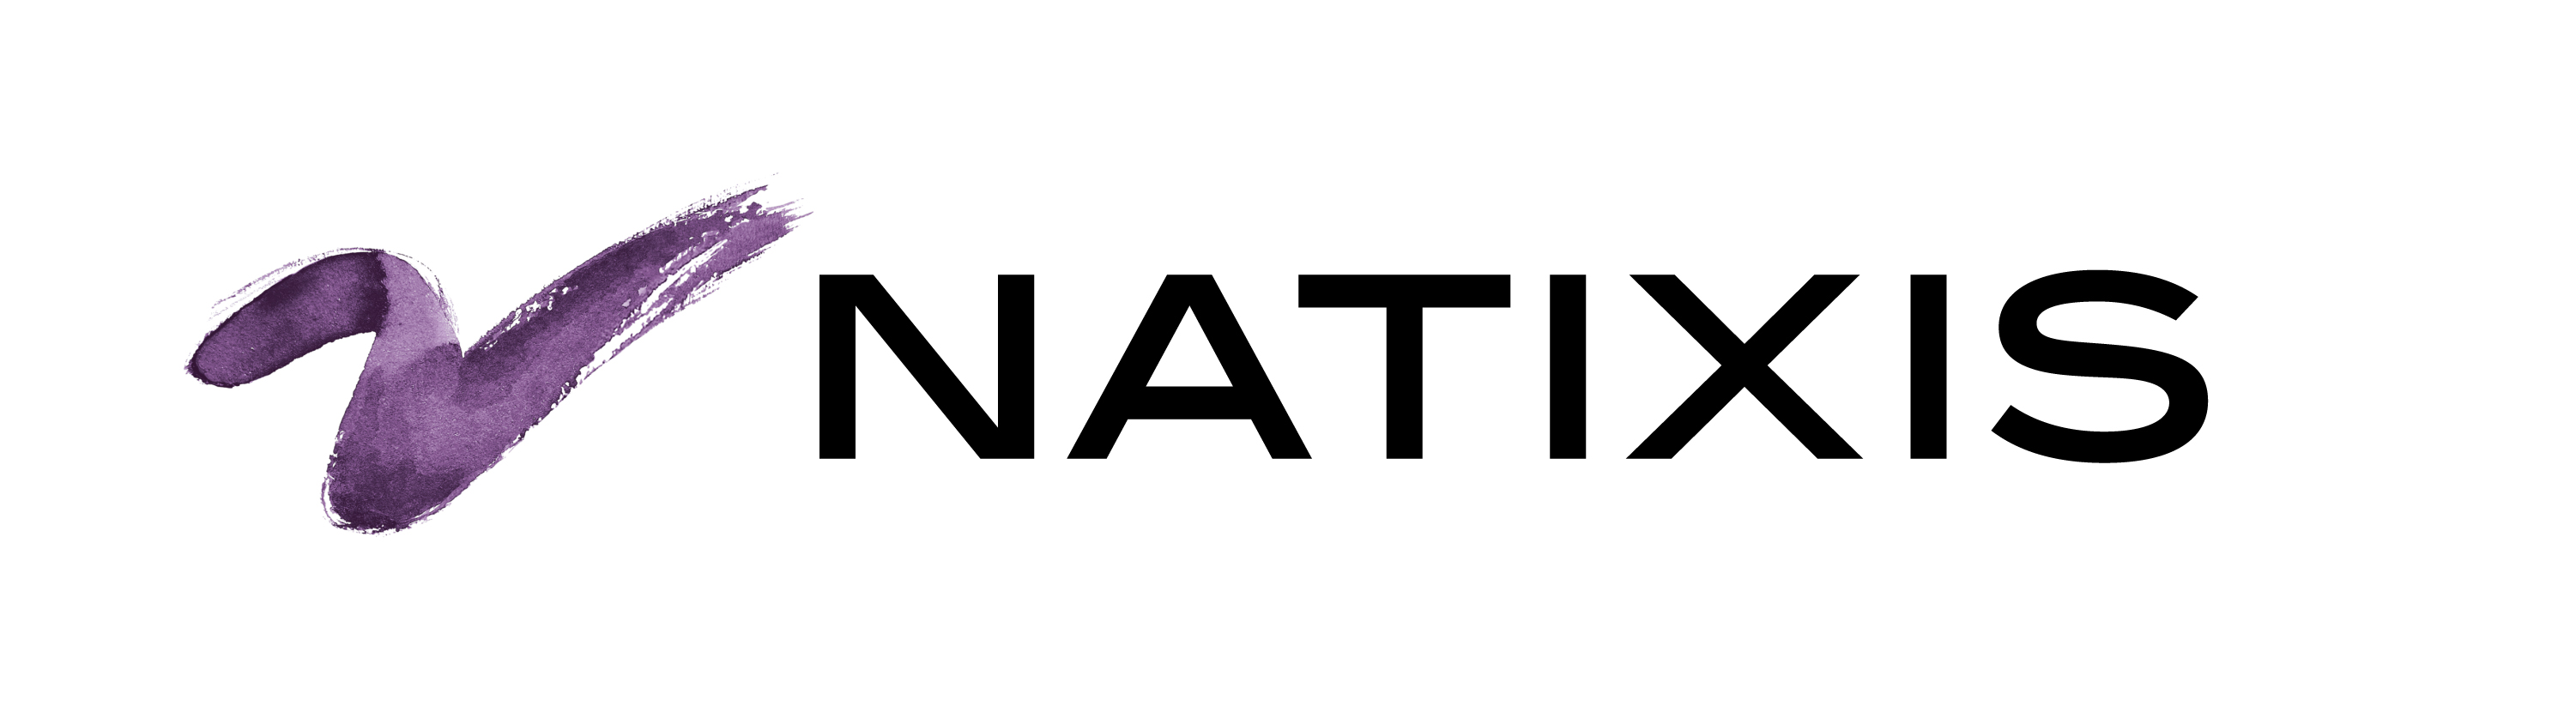 Natixis_logo